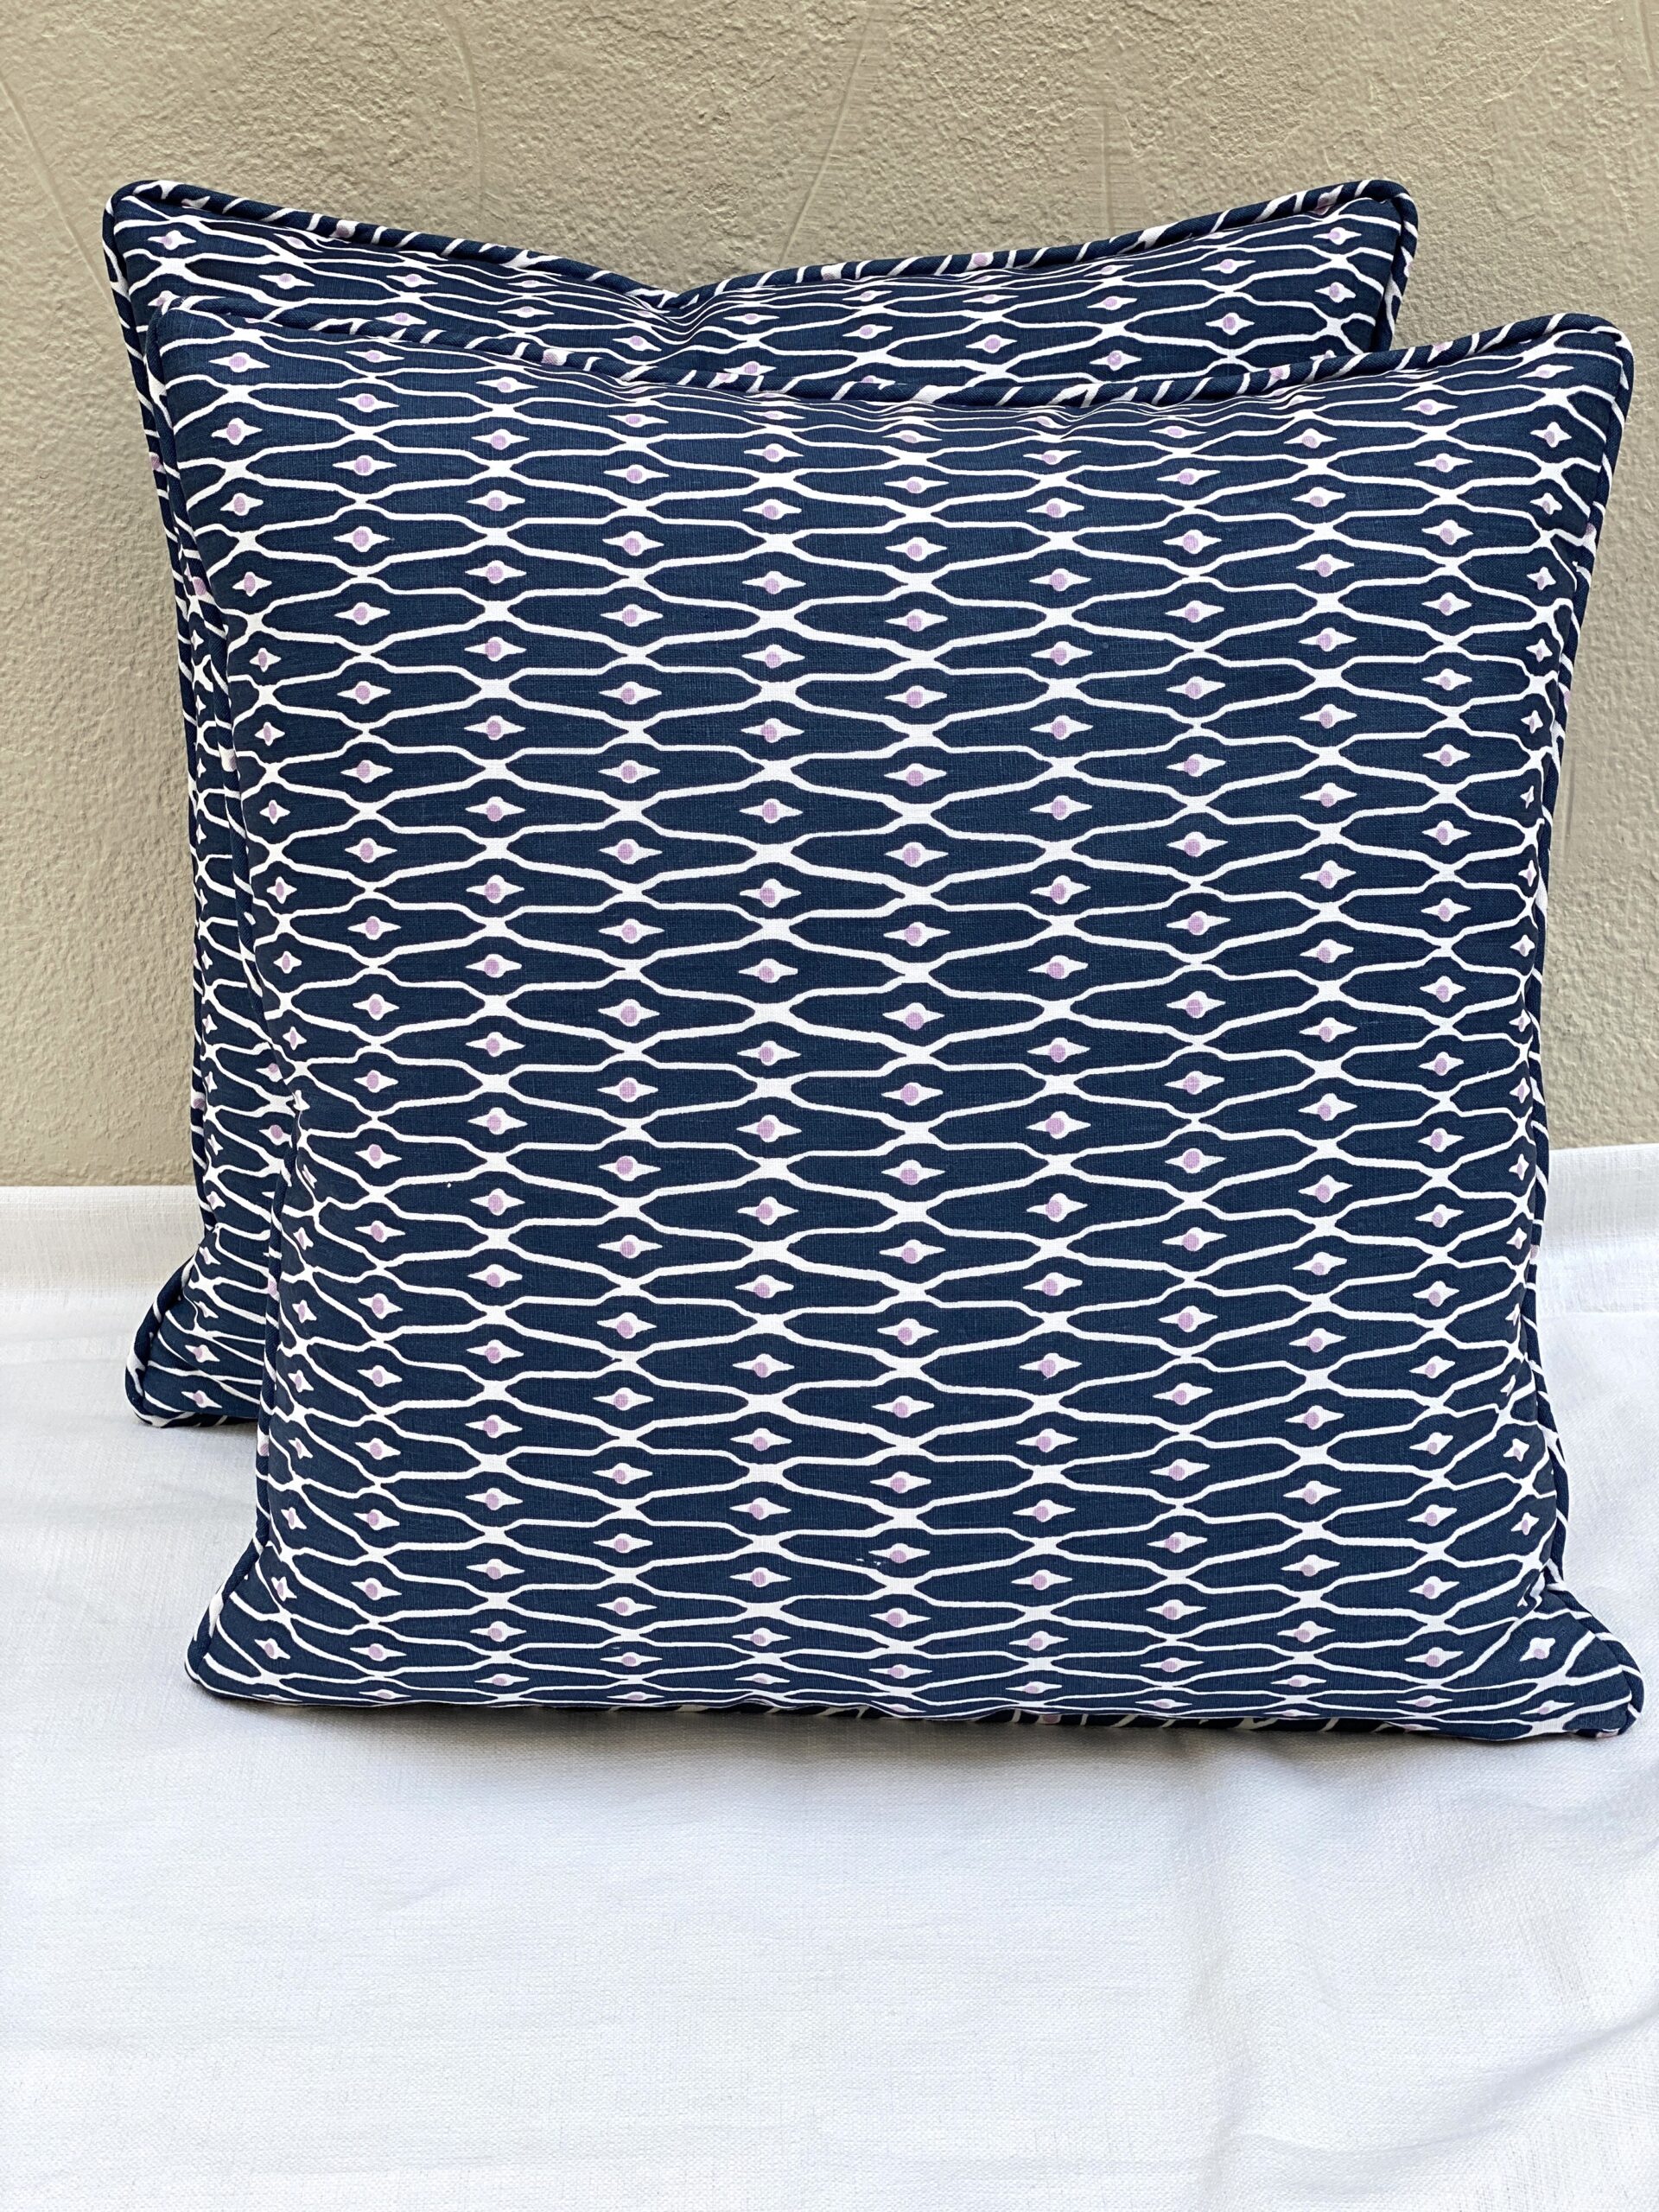 Maresca Textiles Lattice Block Pillows